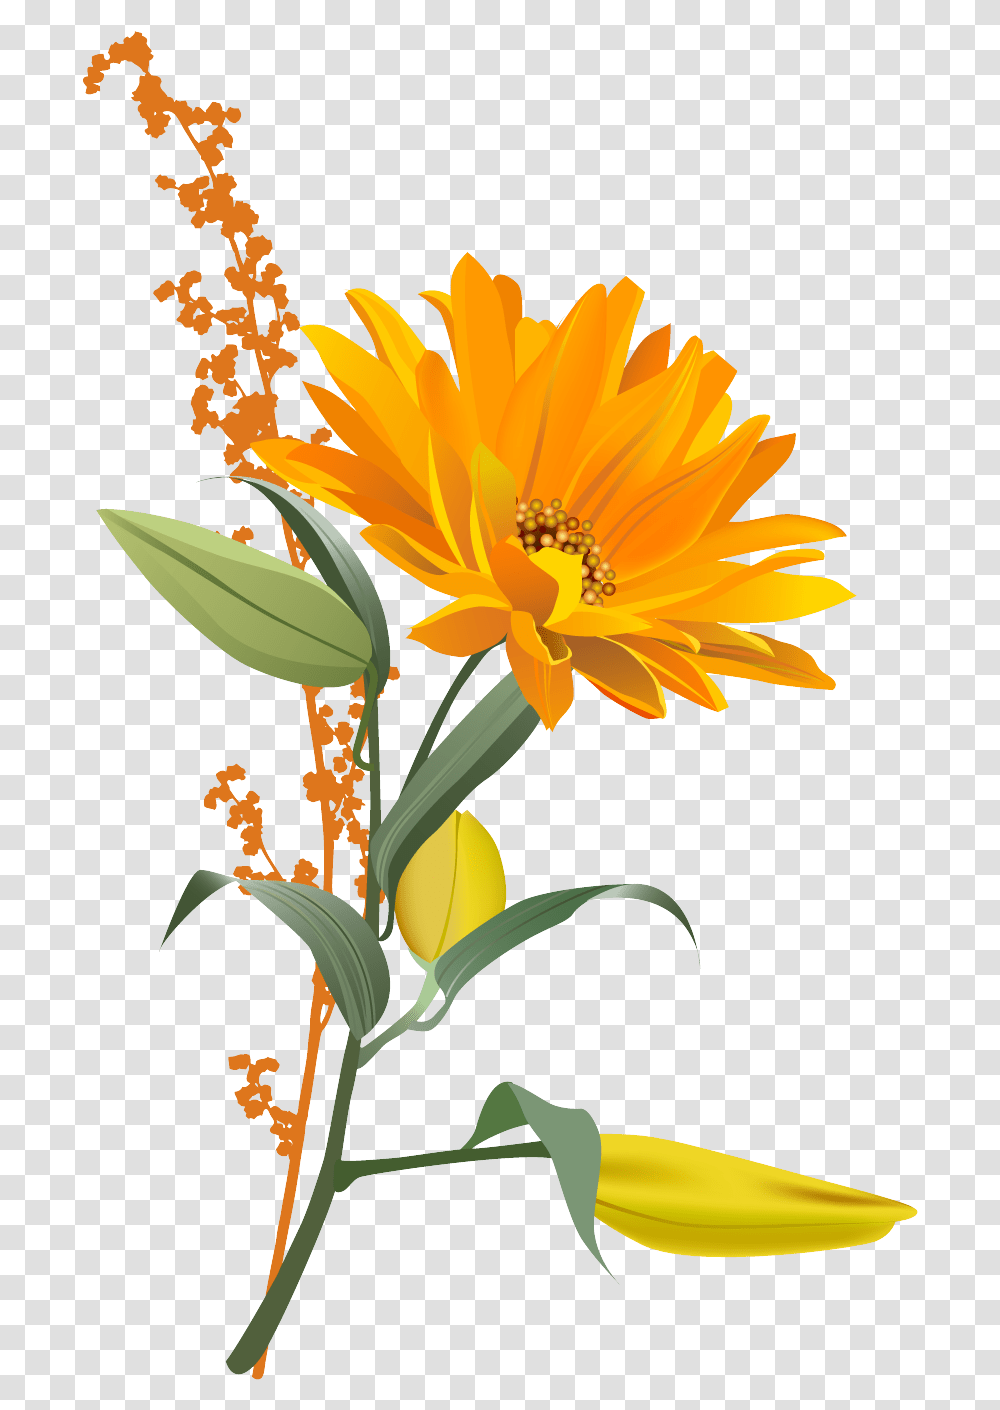 Free Download Of Sunflower Icon Clipart Background Orange Flower, Plant, Blossom, Flower Arrangement, Flower Bouquet Transparent Png